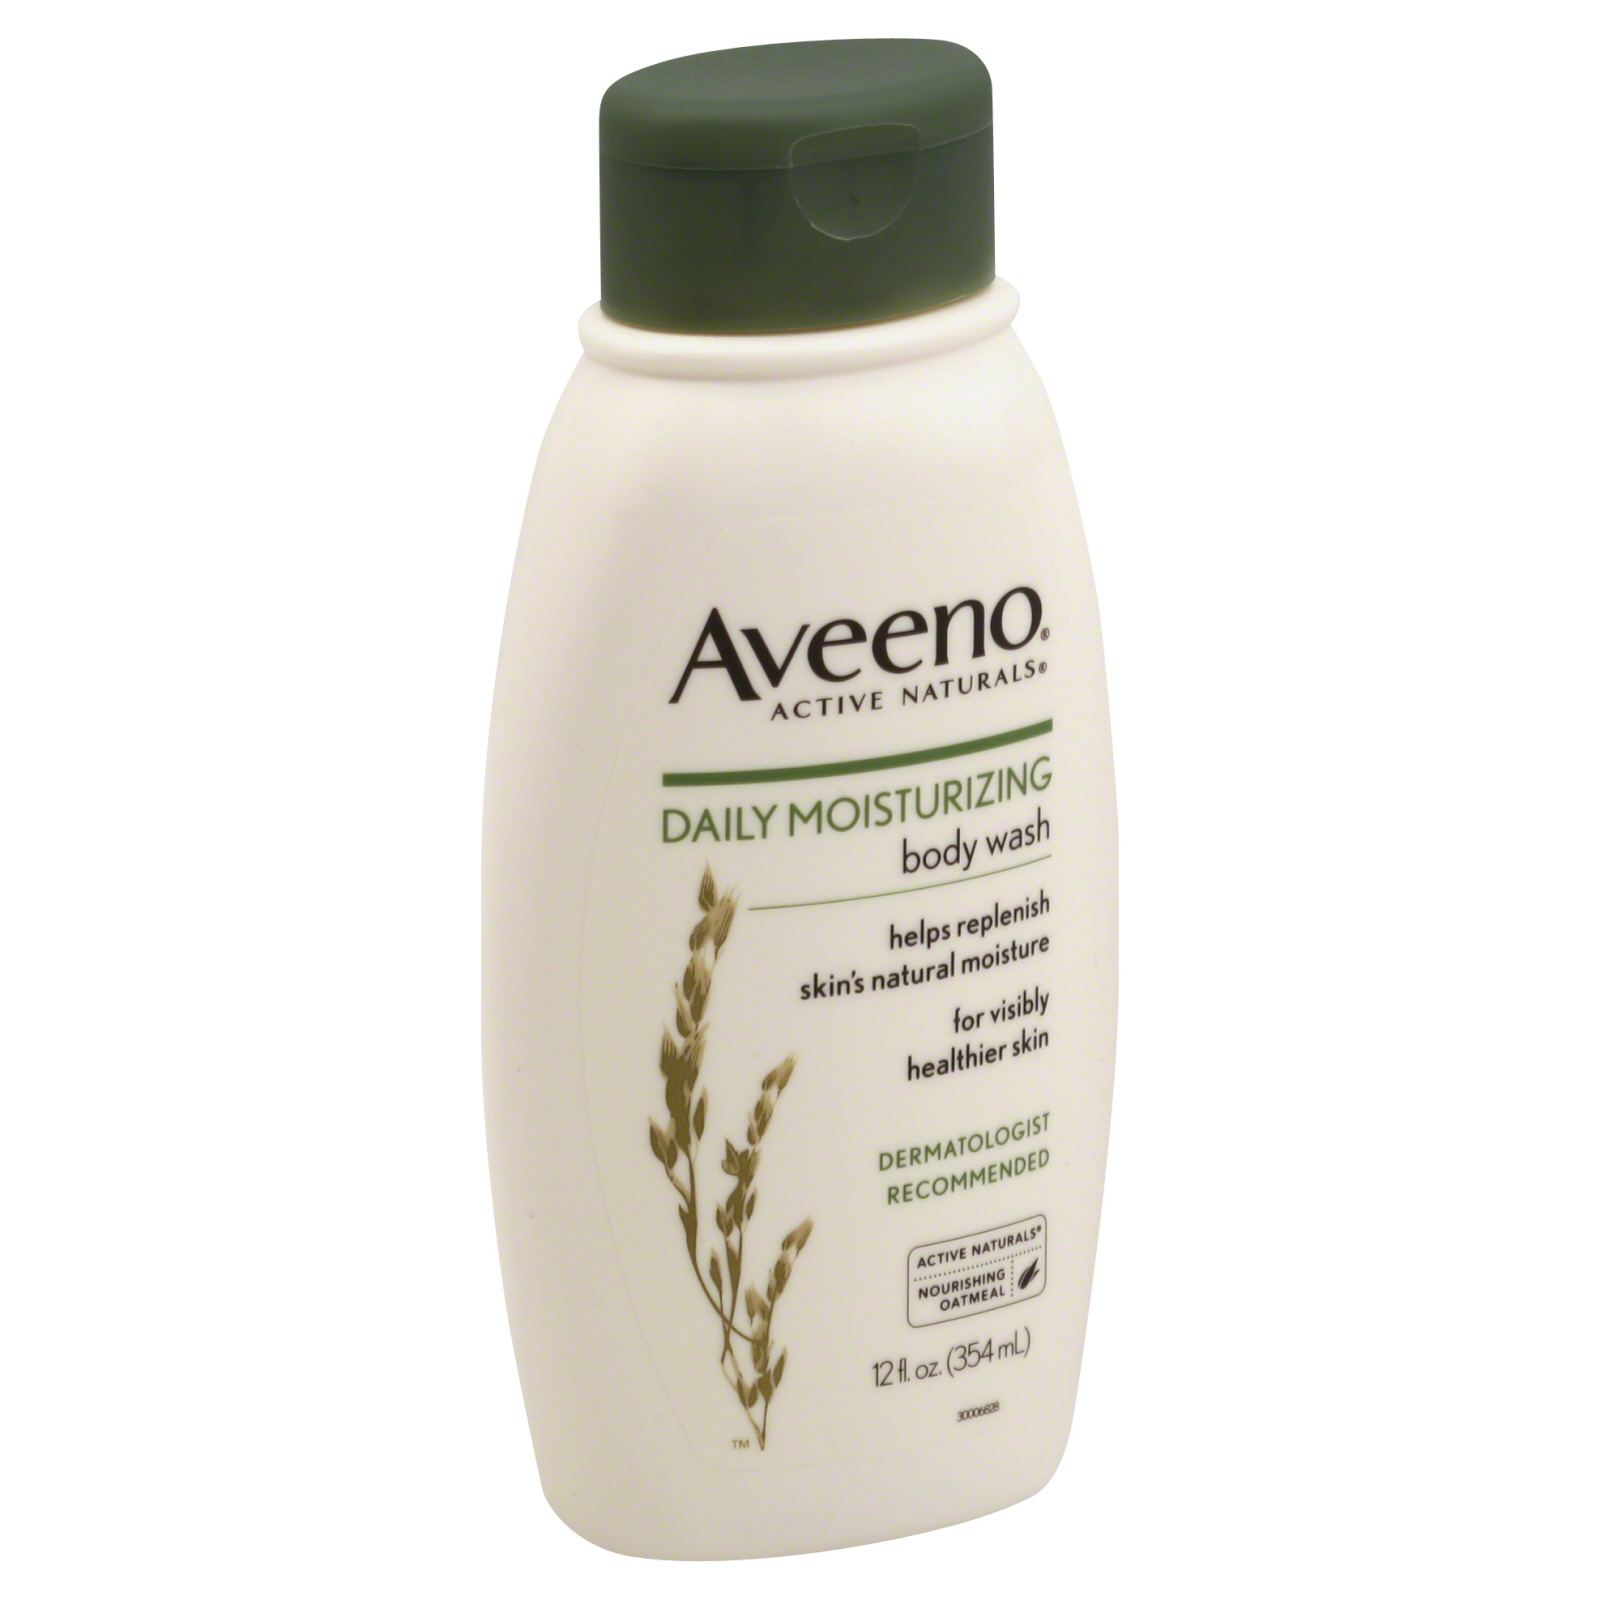 Aveeno Active Naturals Body Wash, Daily Moisturizing, 12 fl oz (354 ml)